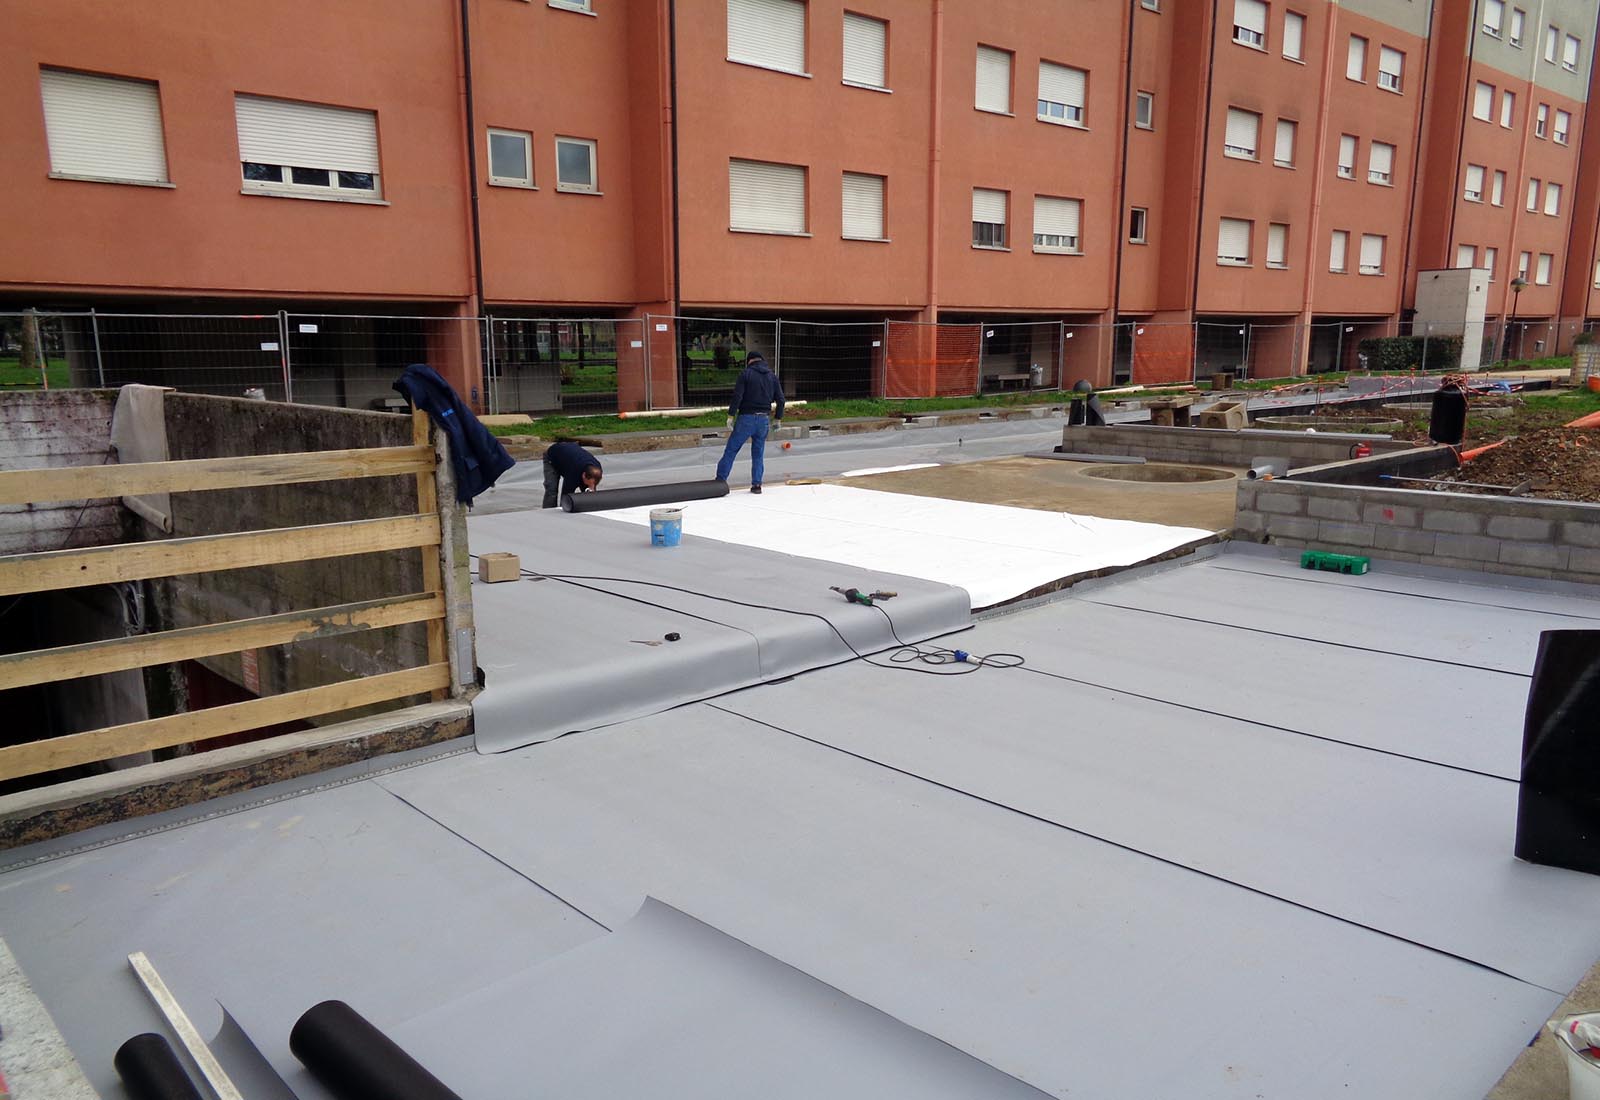 Residential ensemble Aler property in Cernusco sul Naviglio - Waterproofing of the garage roof